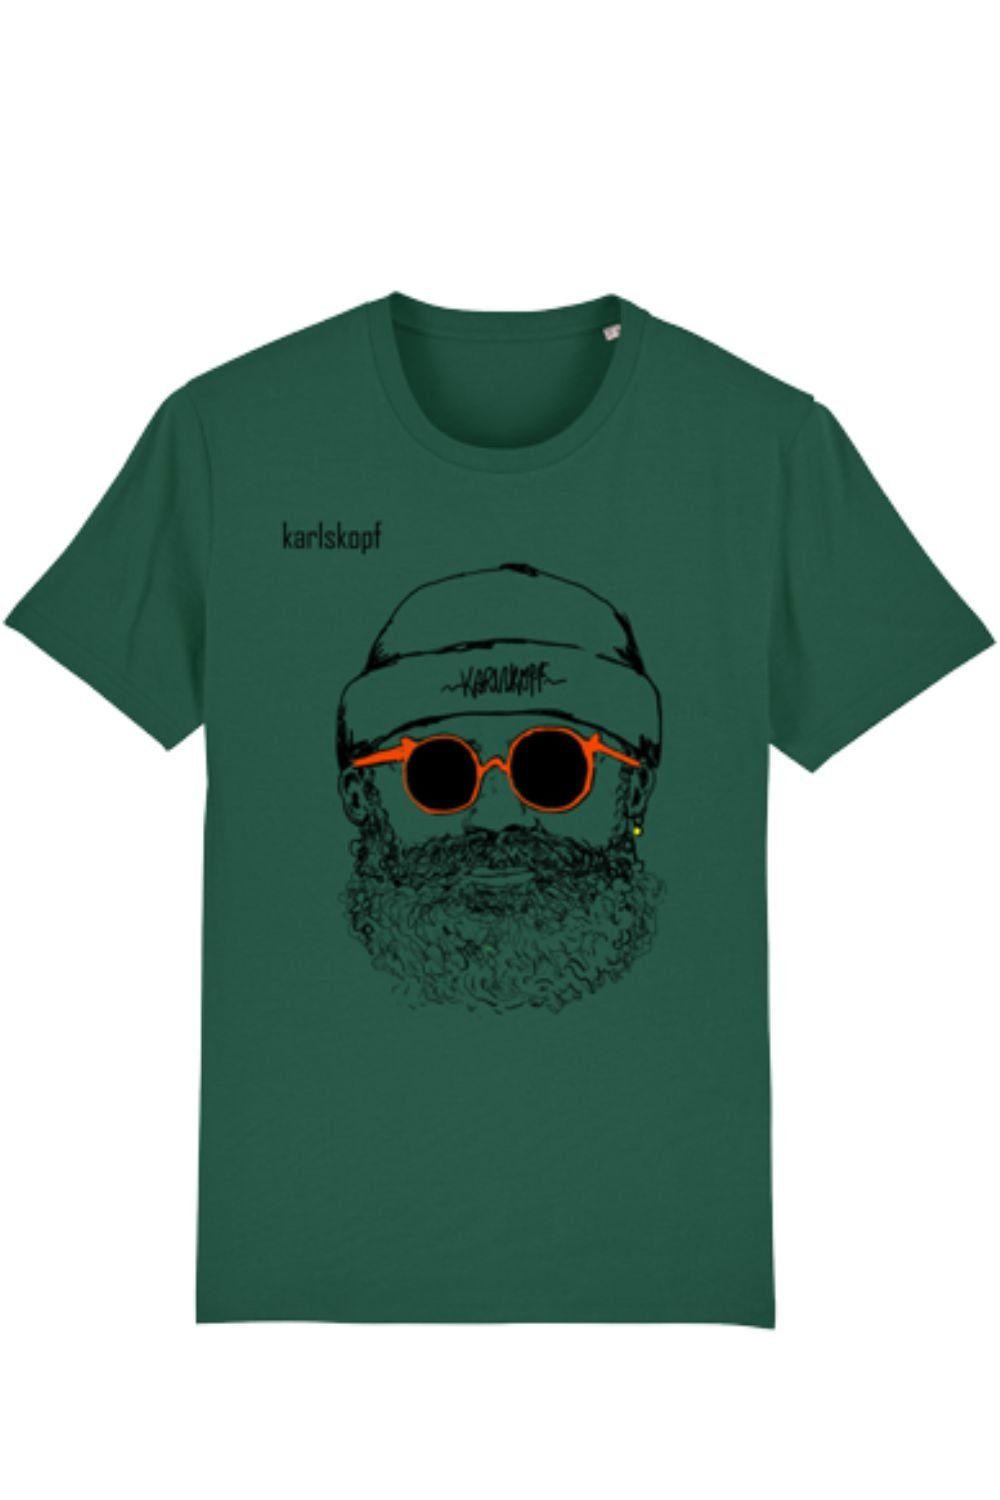 karlskopf Print-Shirt Rundhalsshirt Basic HIPSTER Softgruen